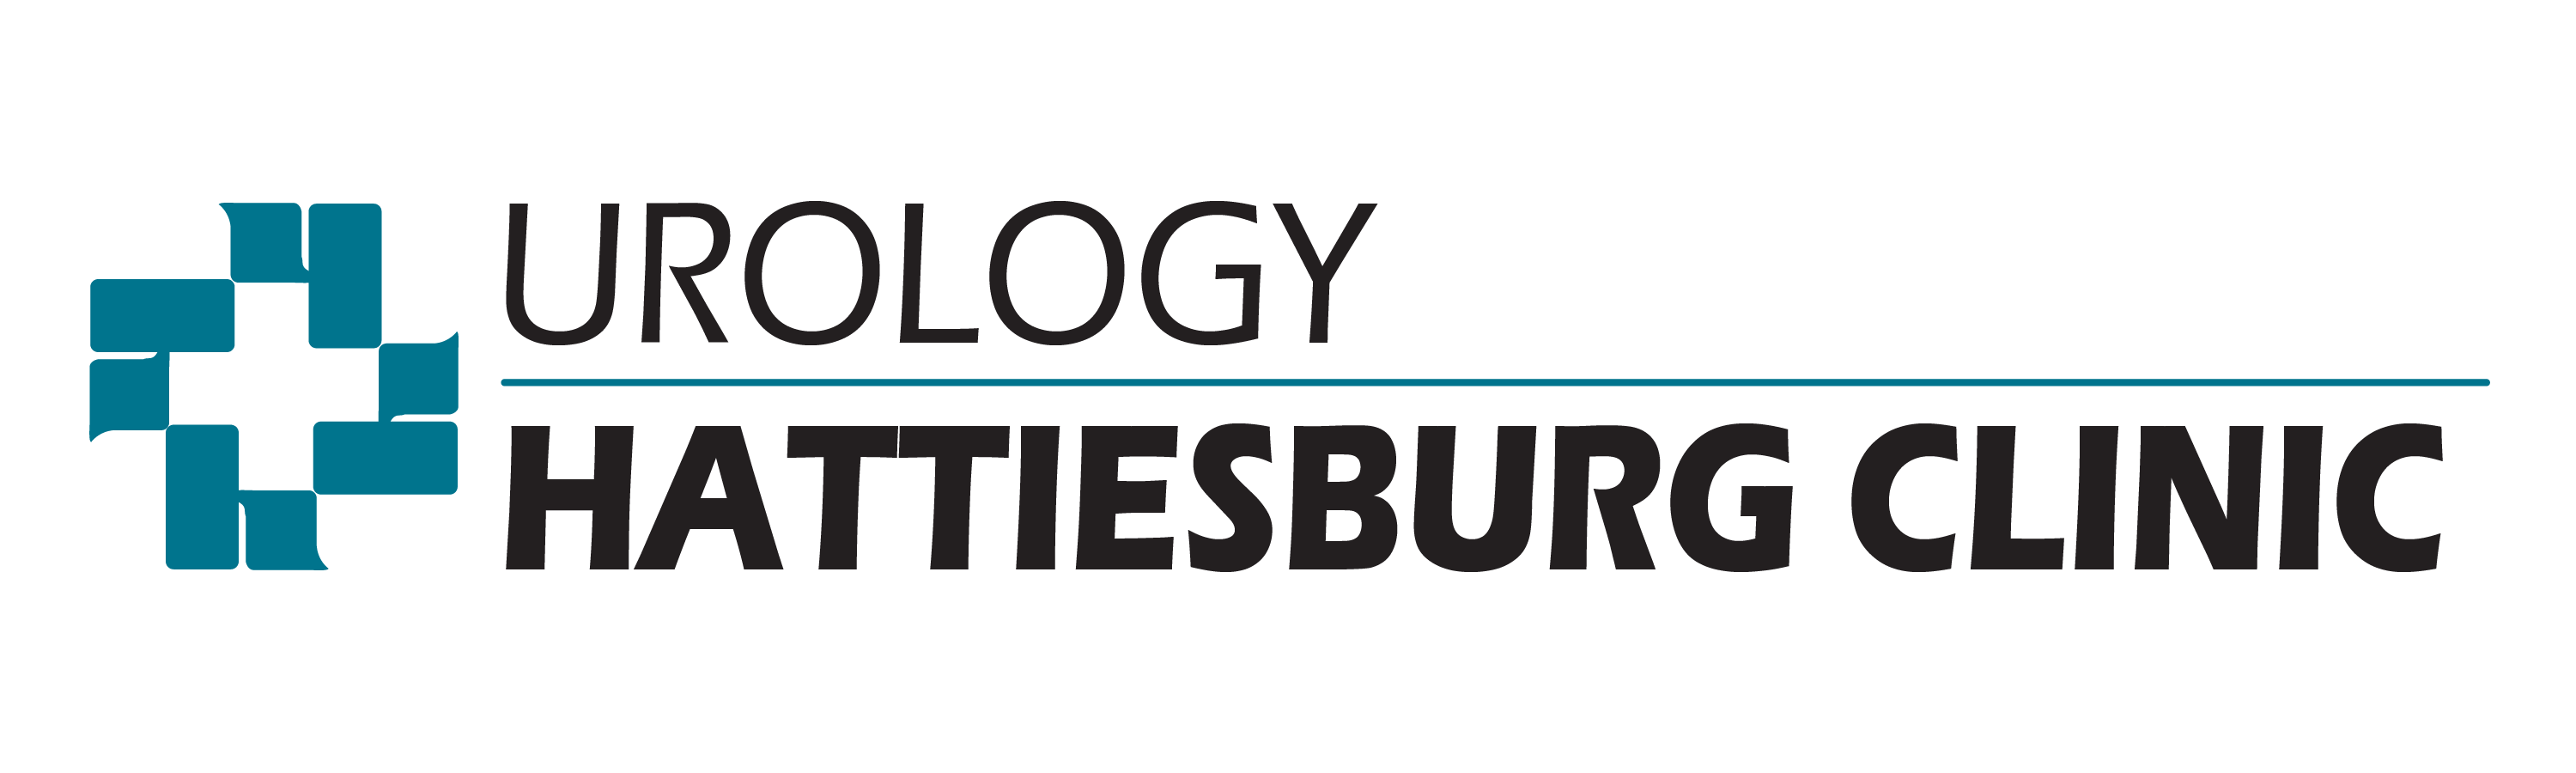 Urology logo